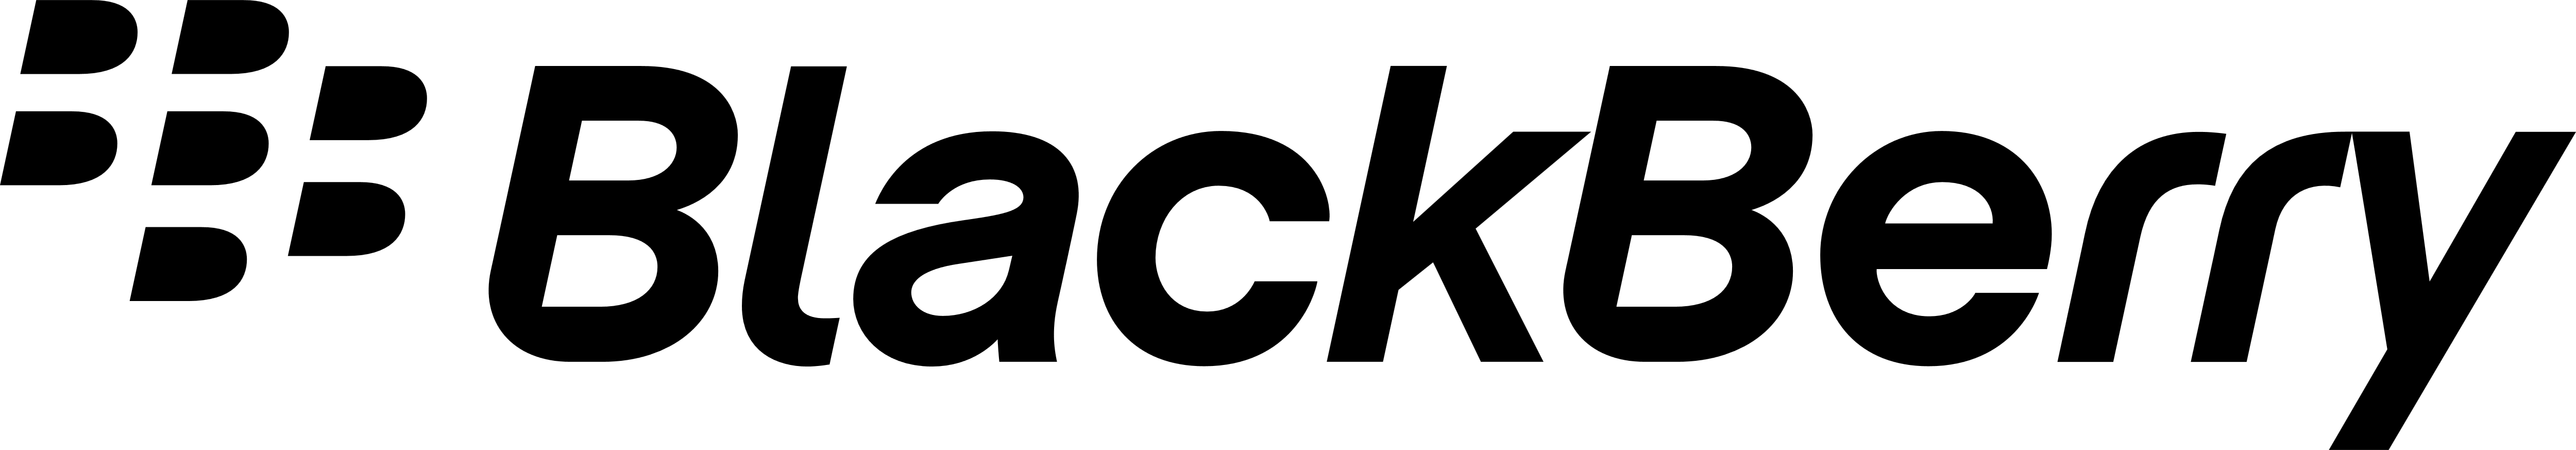 Blackberry Logo PNG - 175936